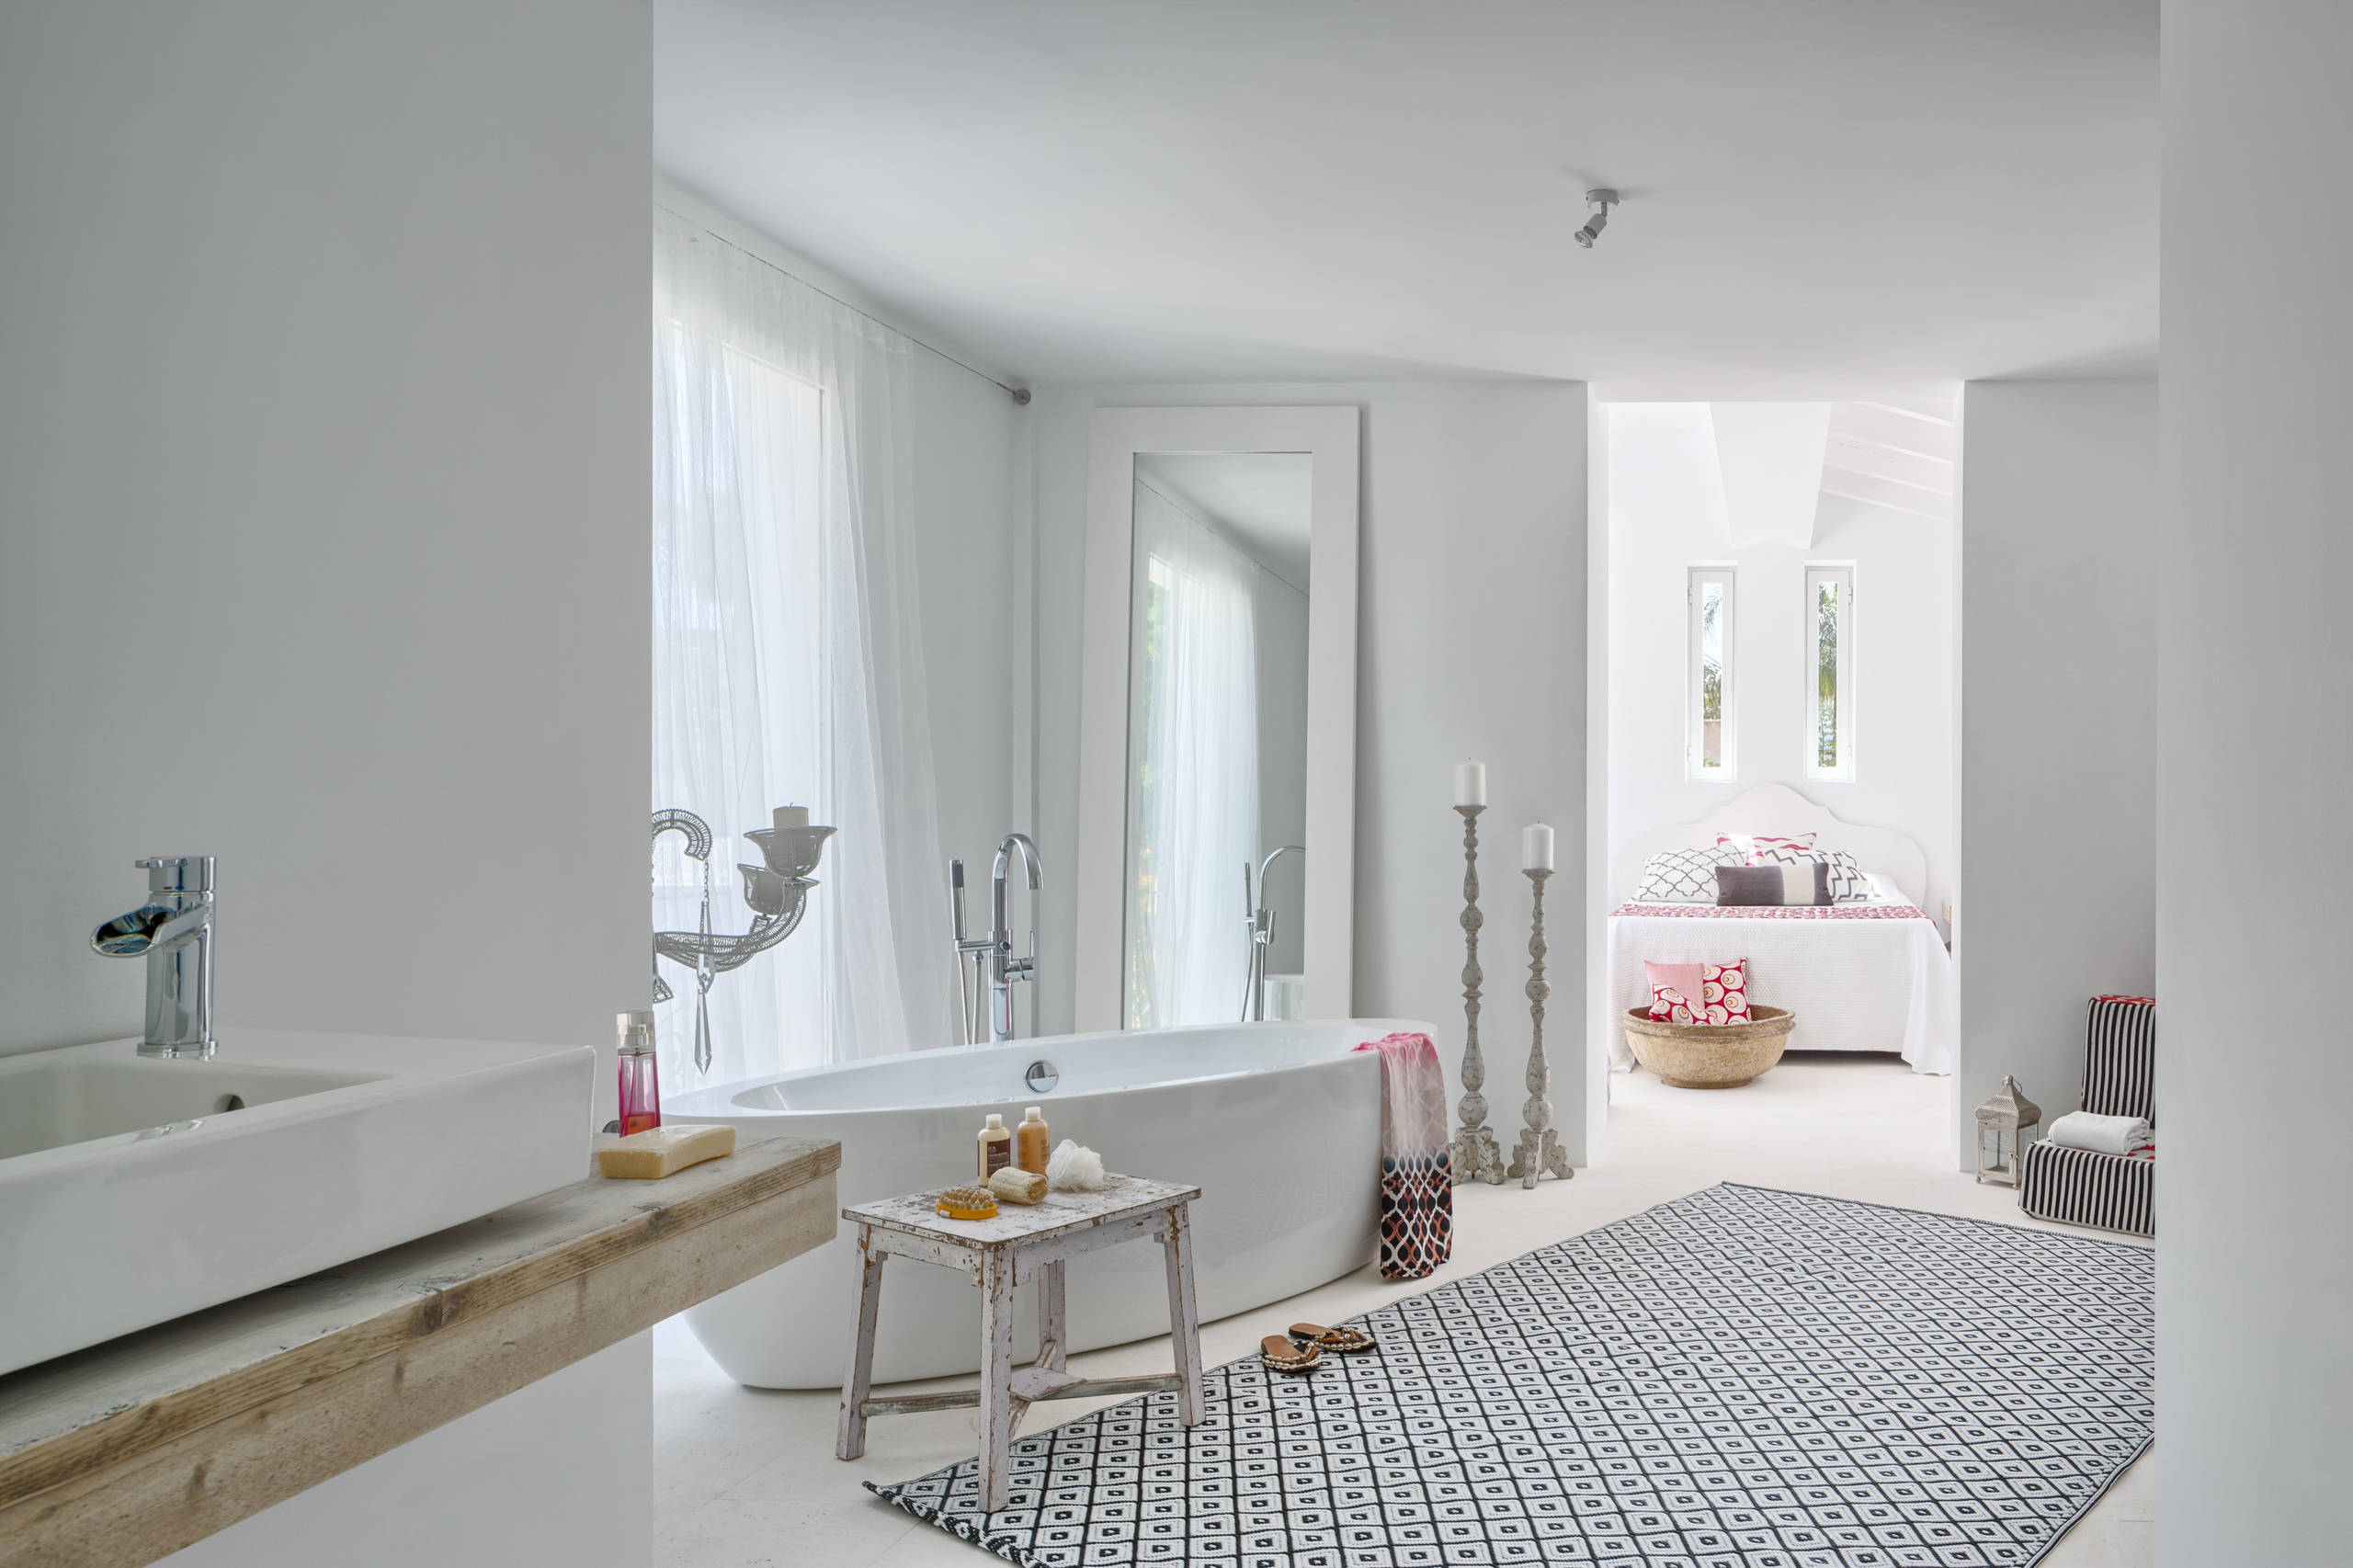 20 Enchanting Mediterranean Bathroom Designs You Must See